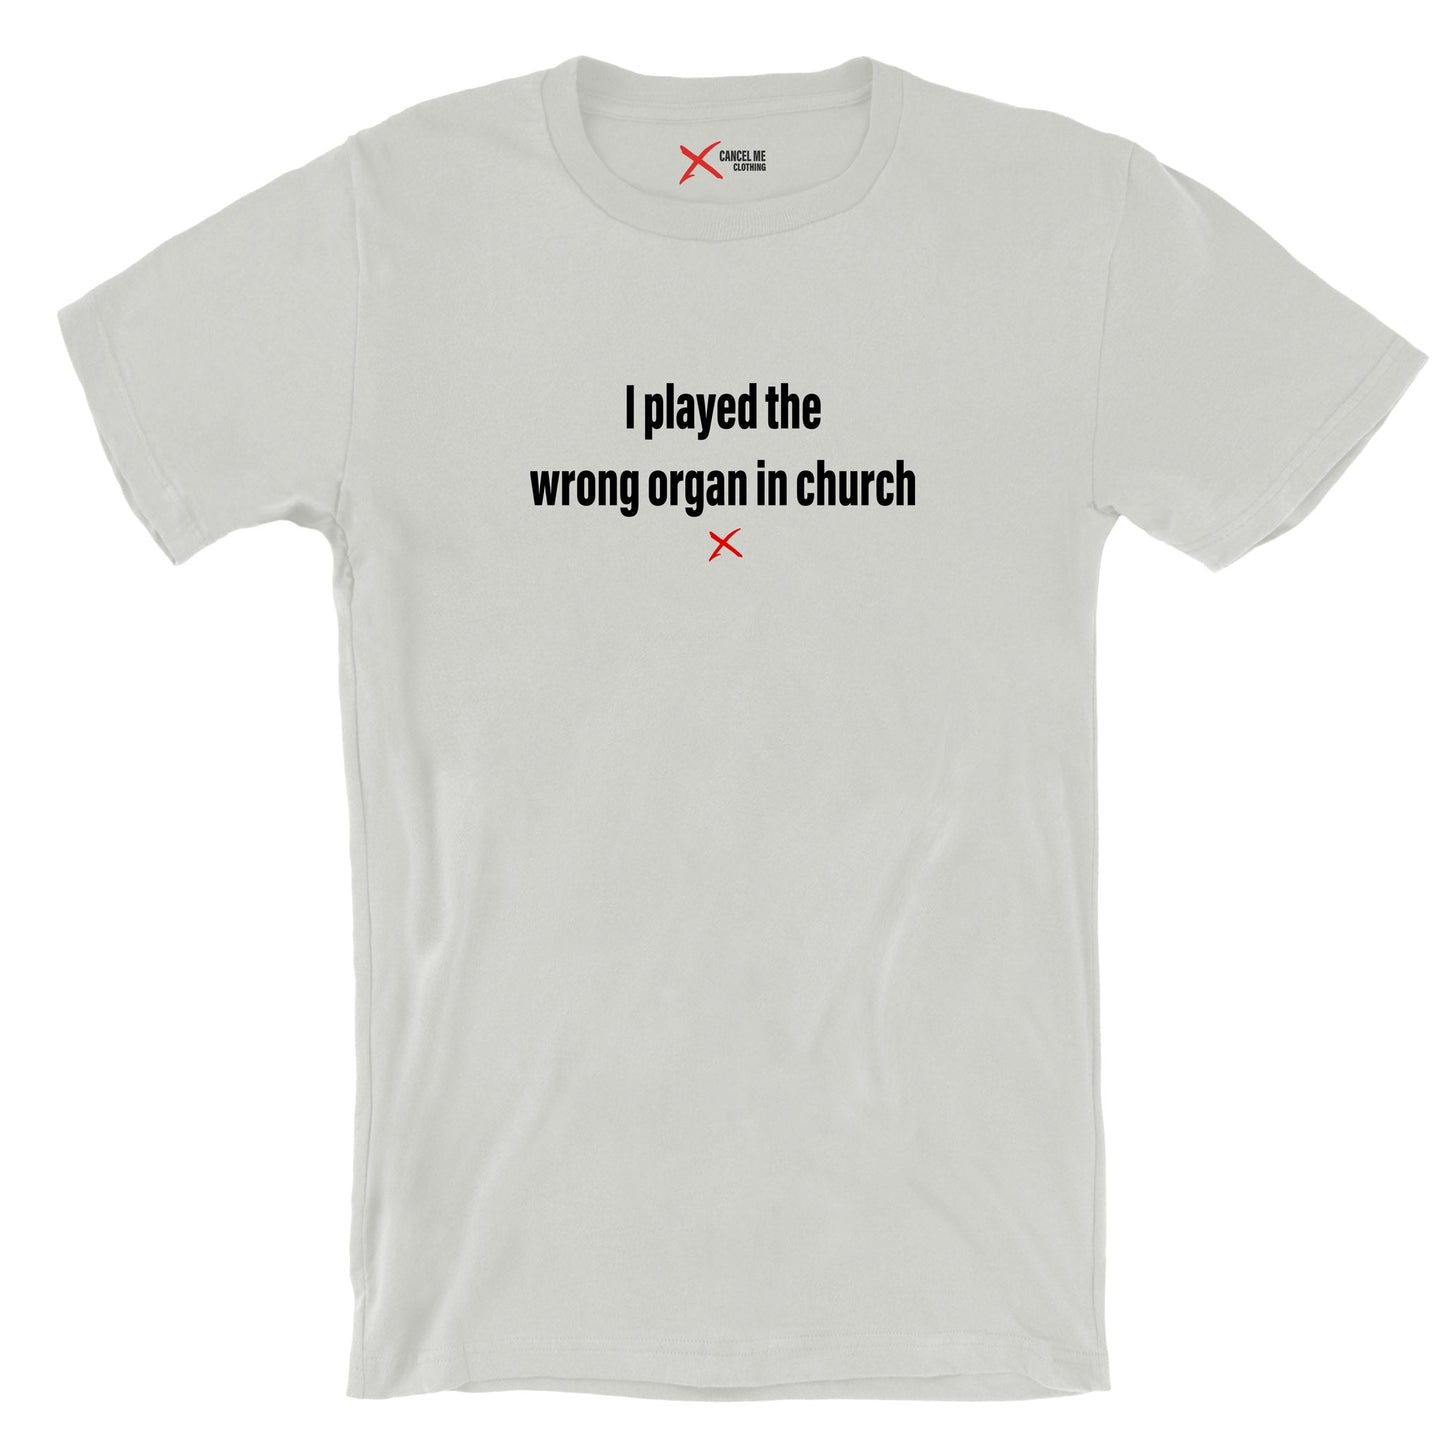 I played the wrong organ in church - Shirt